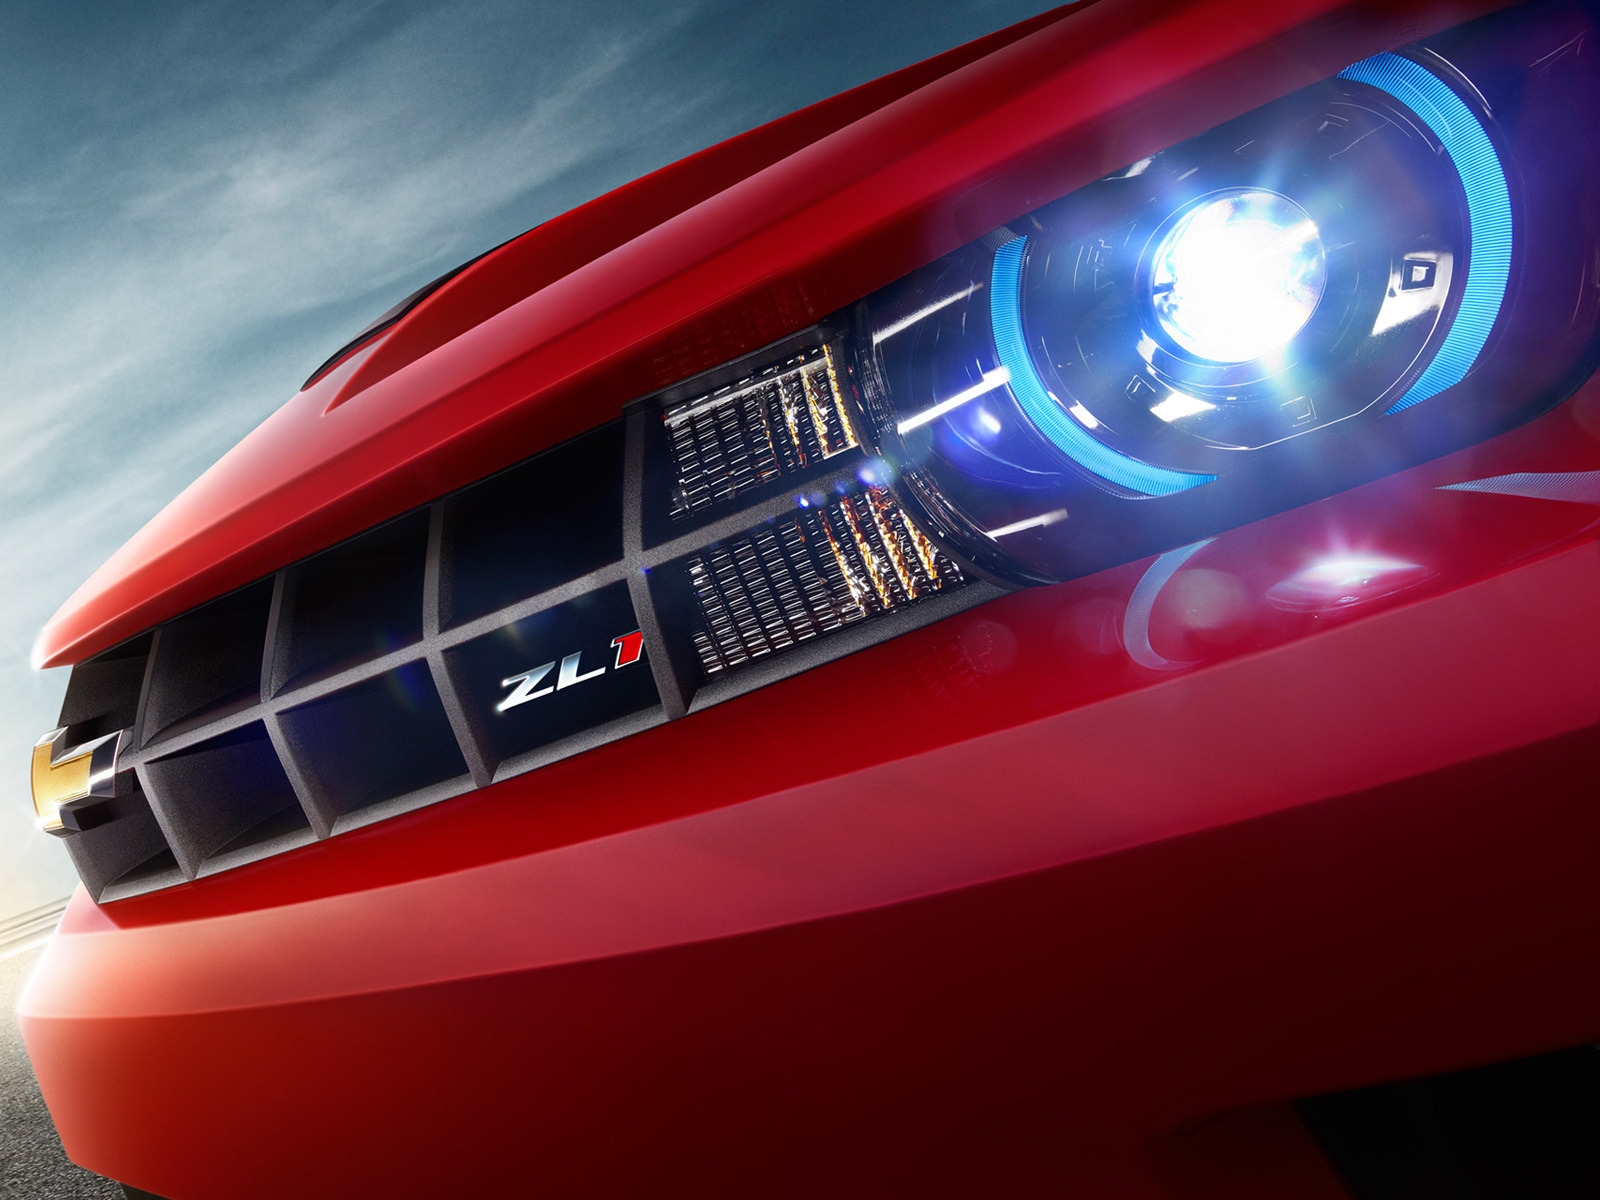 2012 Chevy Camaro ZL1 Headlight for 1600 x 1200 resolution